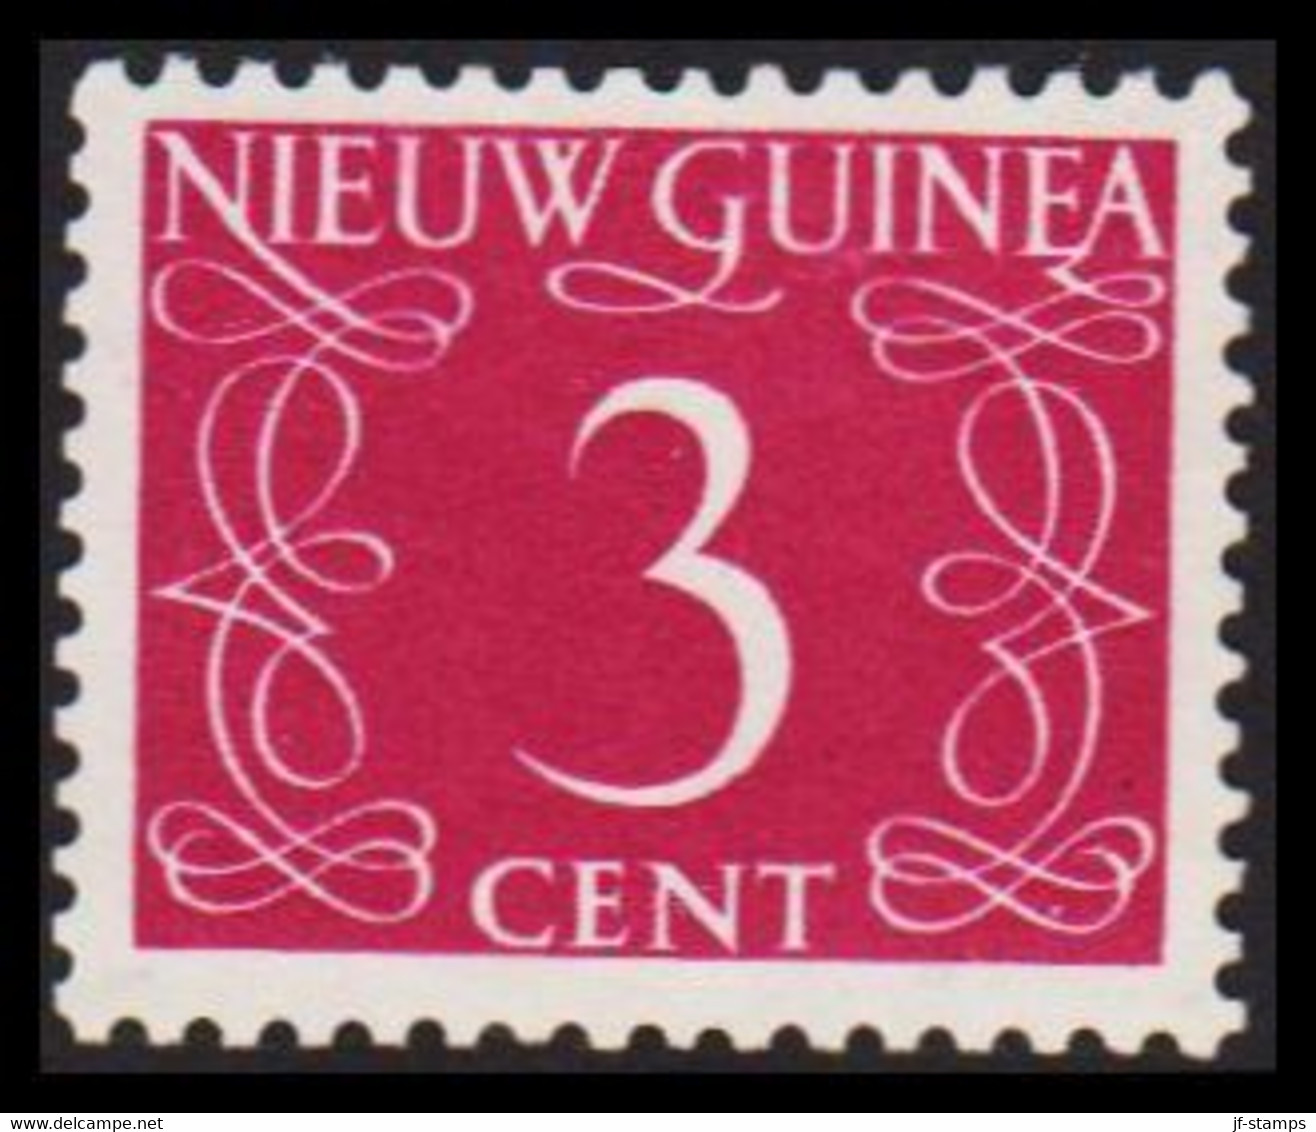 1950. NIEUW GUINEA. Nummerals- Type 3 CENT Hinged.  - JF529321 - Netherlands New Guinea